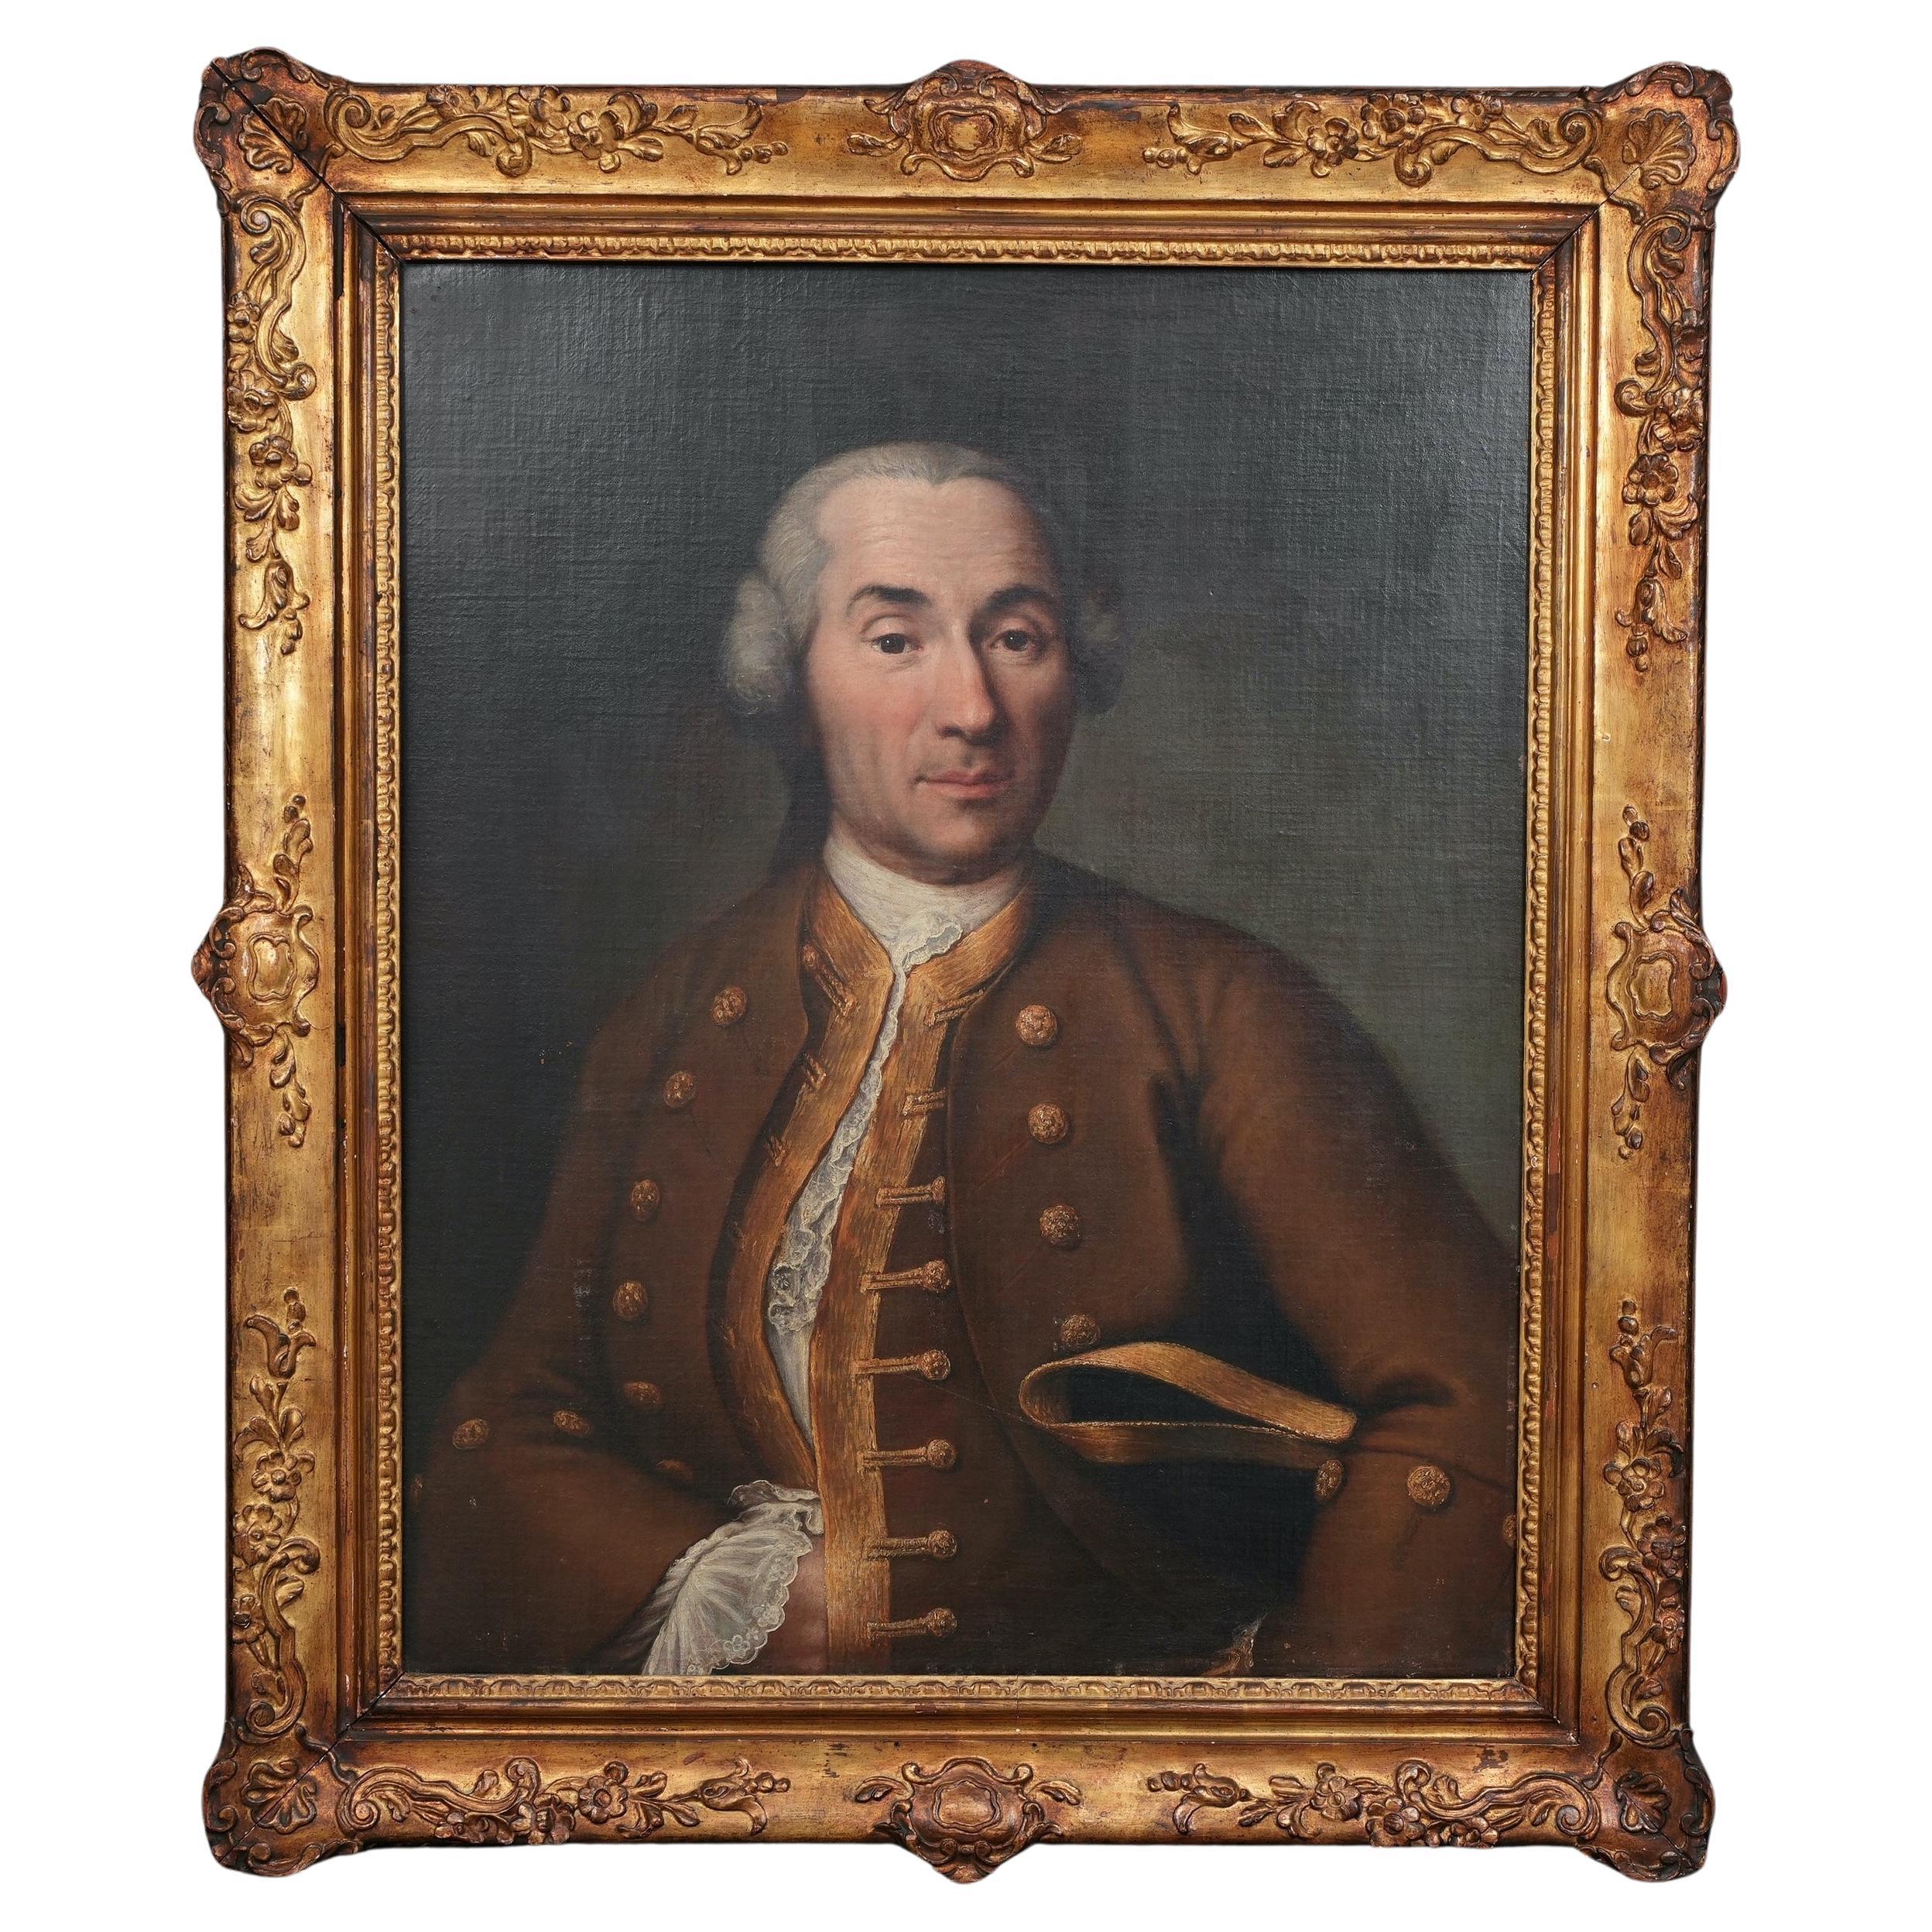  18th Century Italian Nobleman Portrait Oil On Canvas